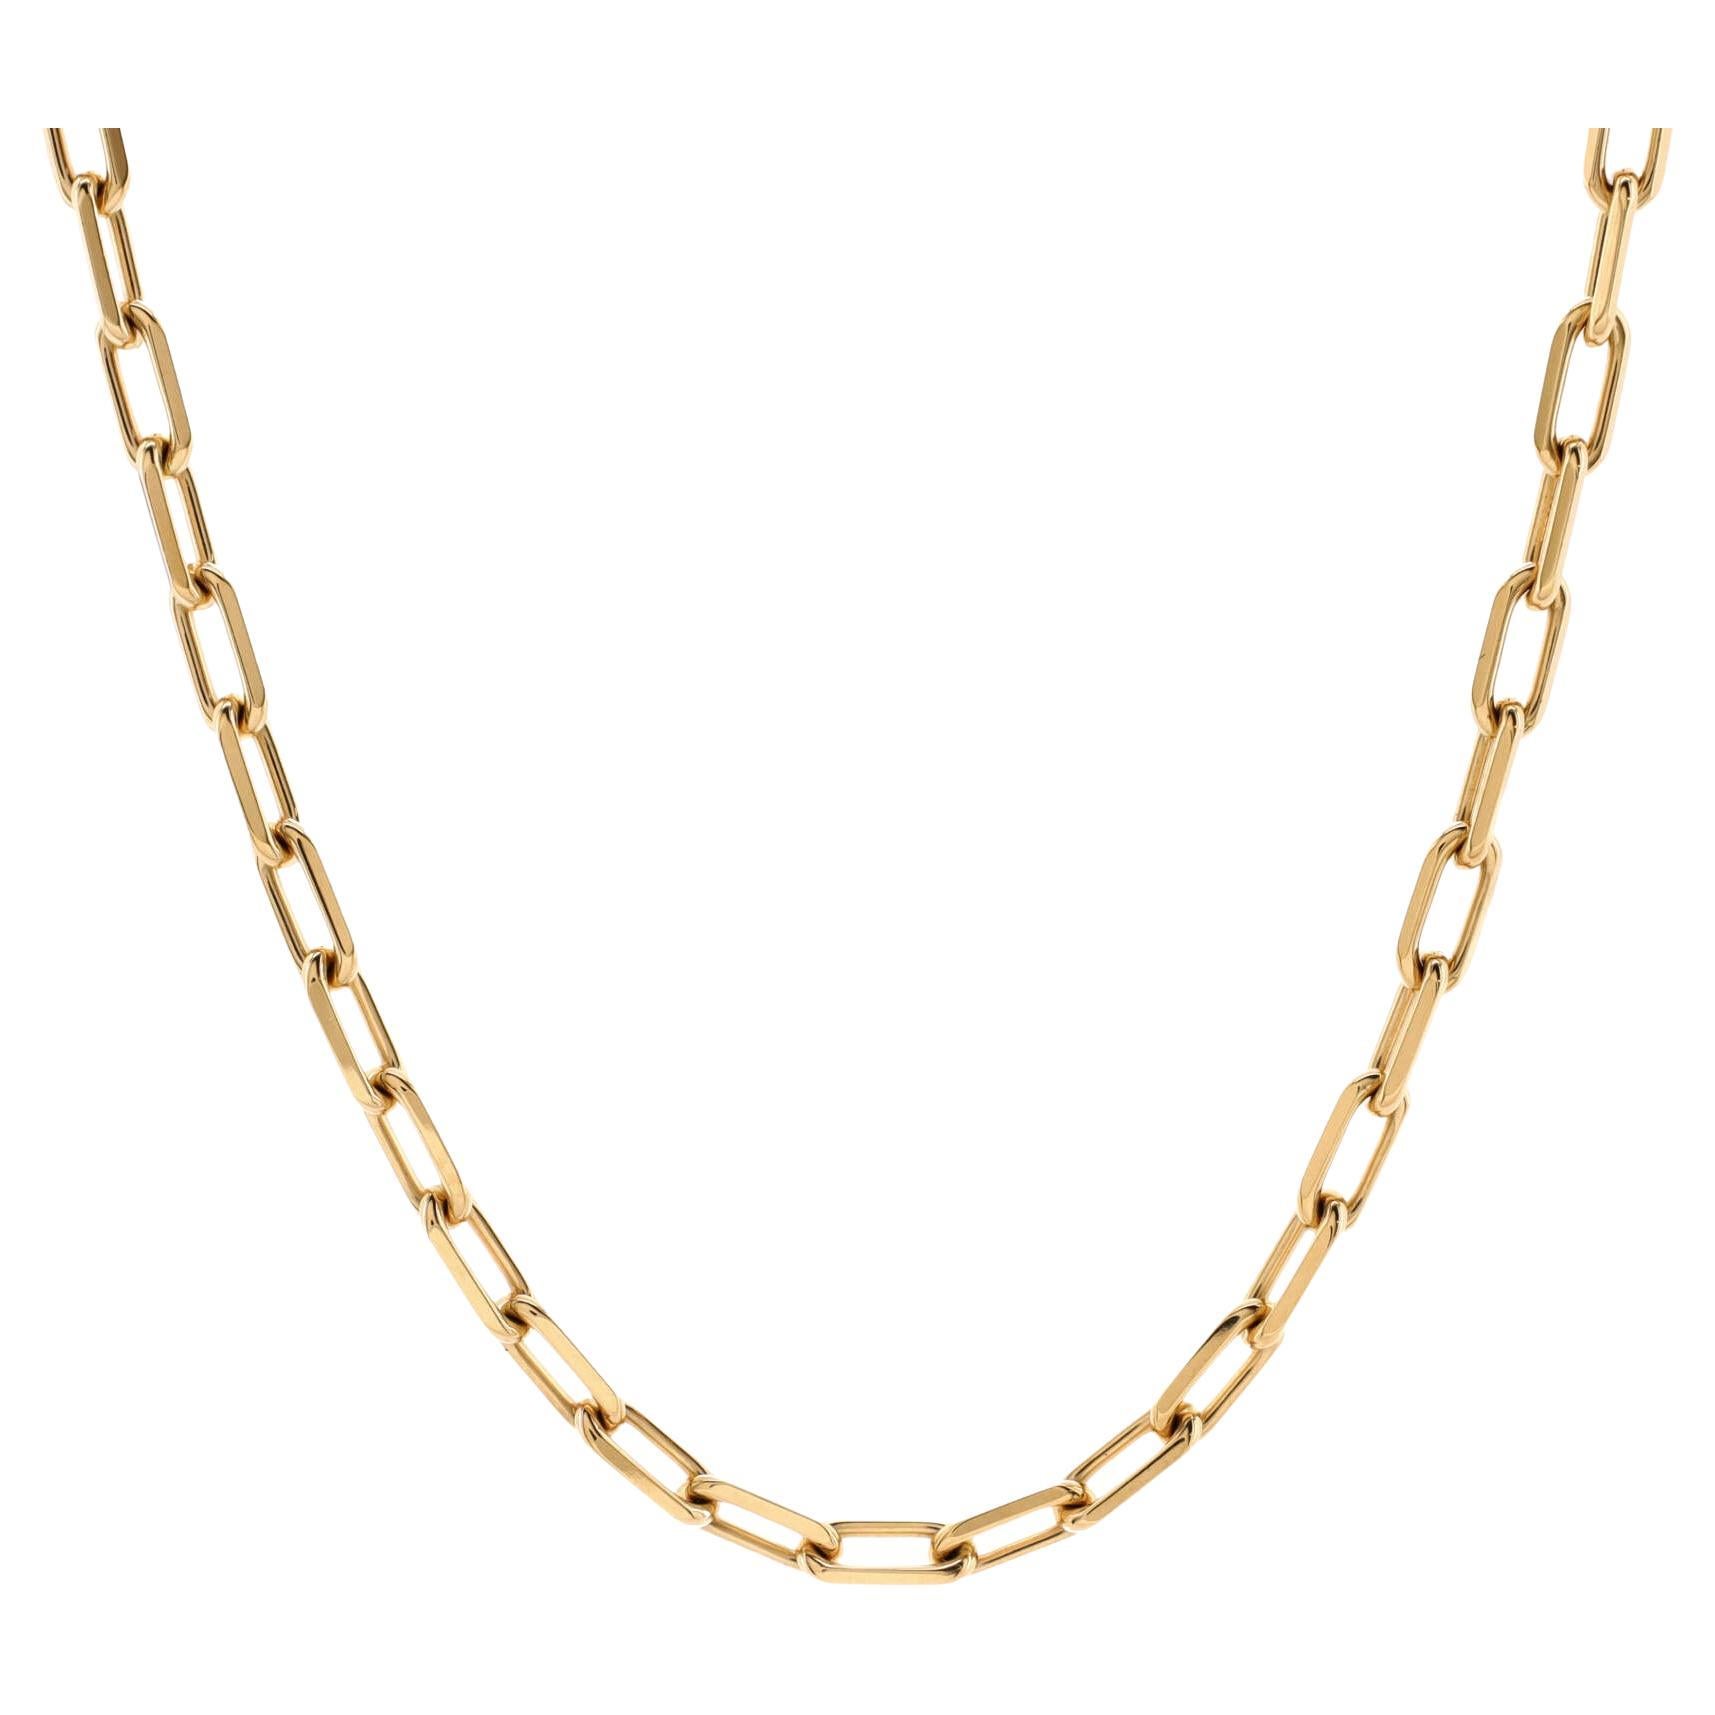 Cartier Santos de Cartier Chain Necklace 18K Yellow Gold